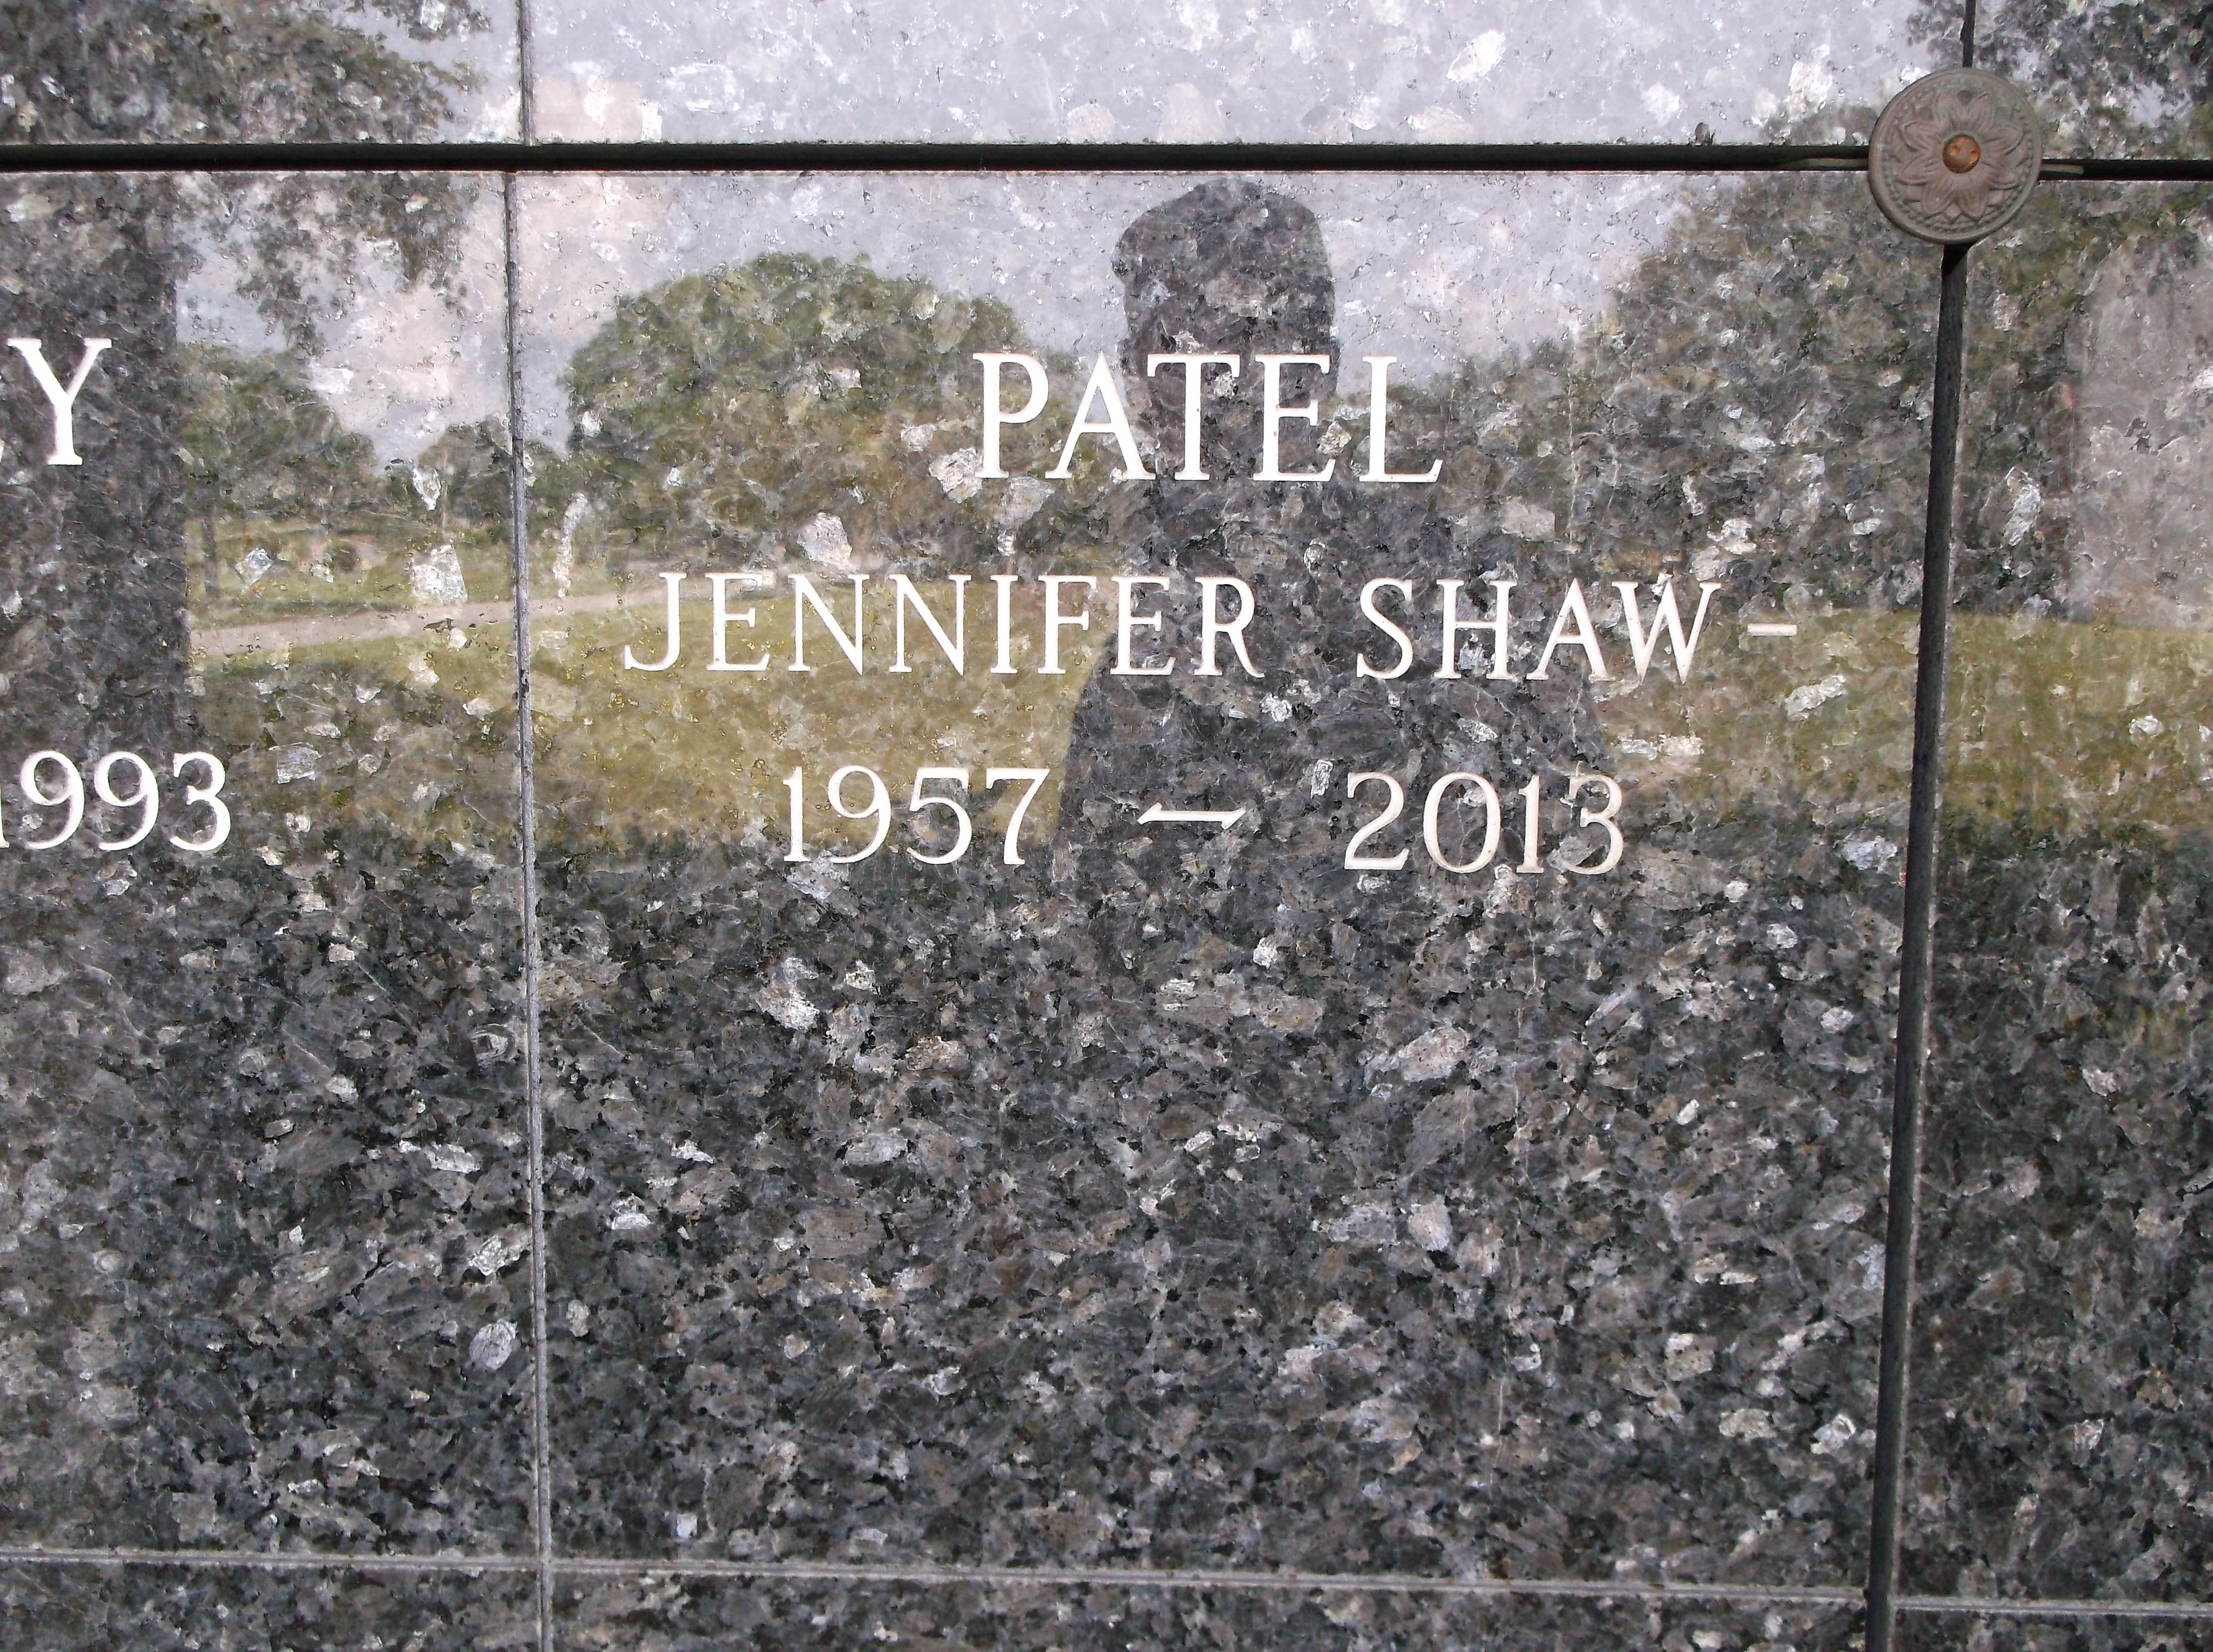 Jennifer Shaw Patel